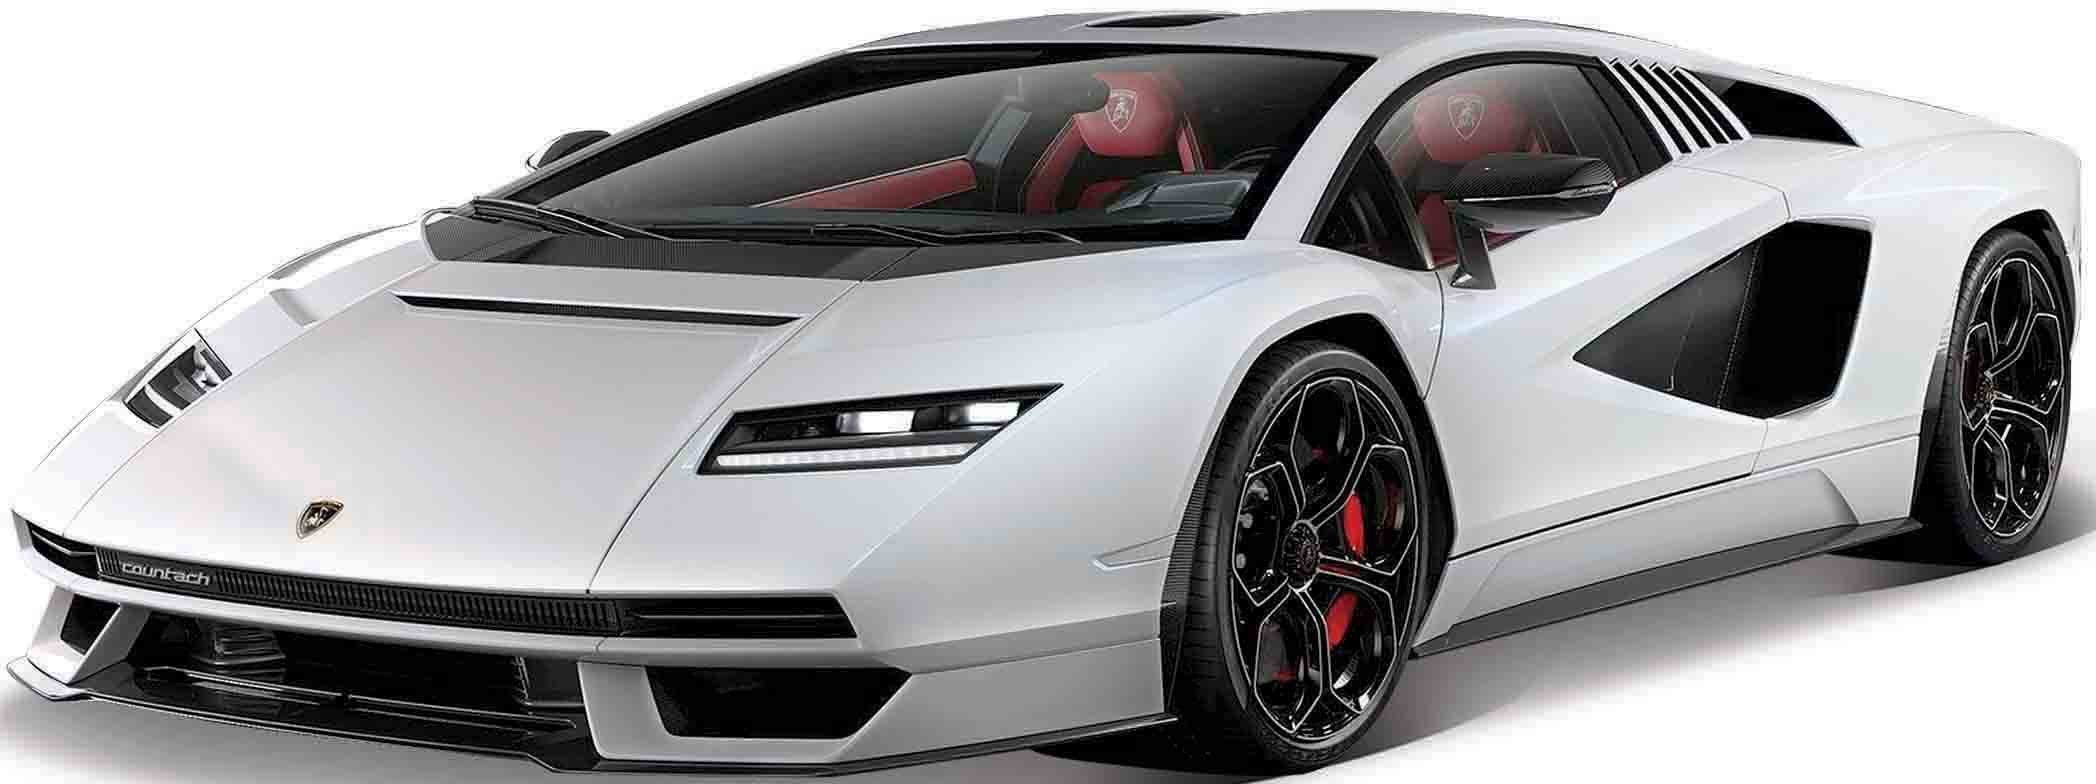 Maisto® Modellauto Lamborghini LPI 800-4, weiß, Maßstab 1:18